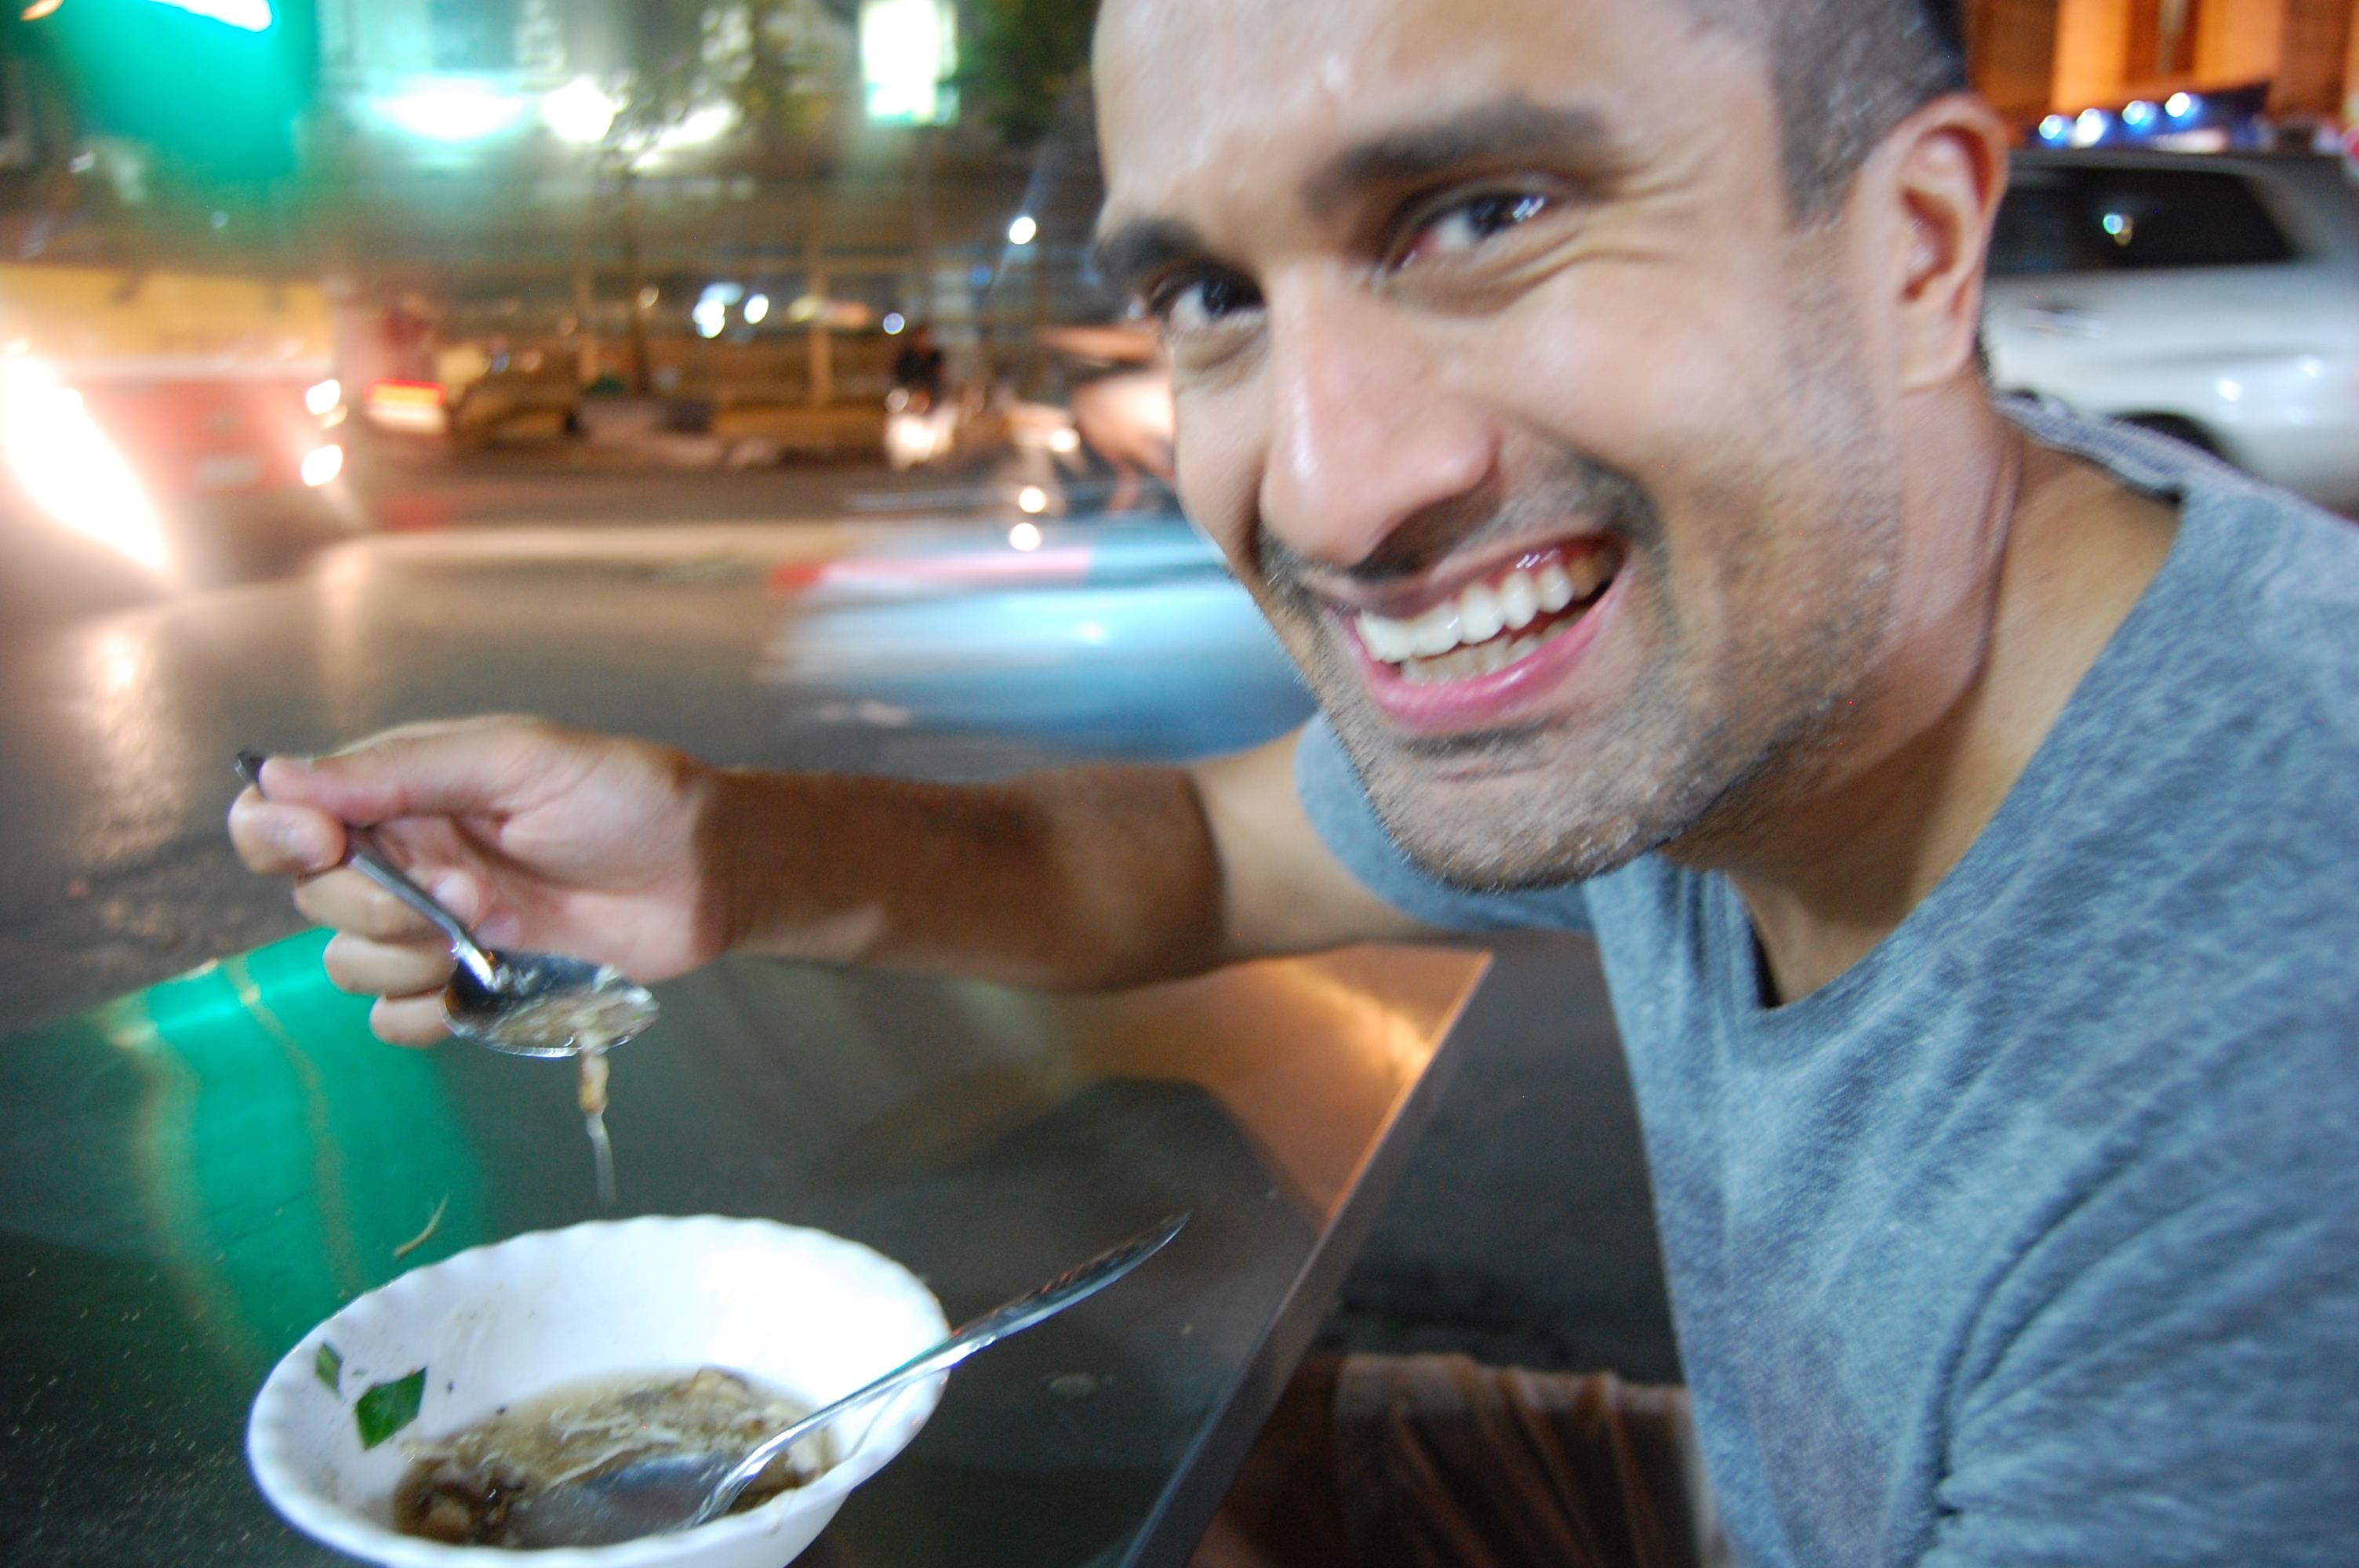 ... we ate some wacky shiz on the streets of Hanoi ...